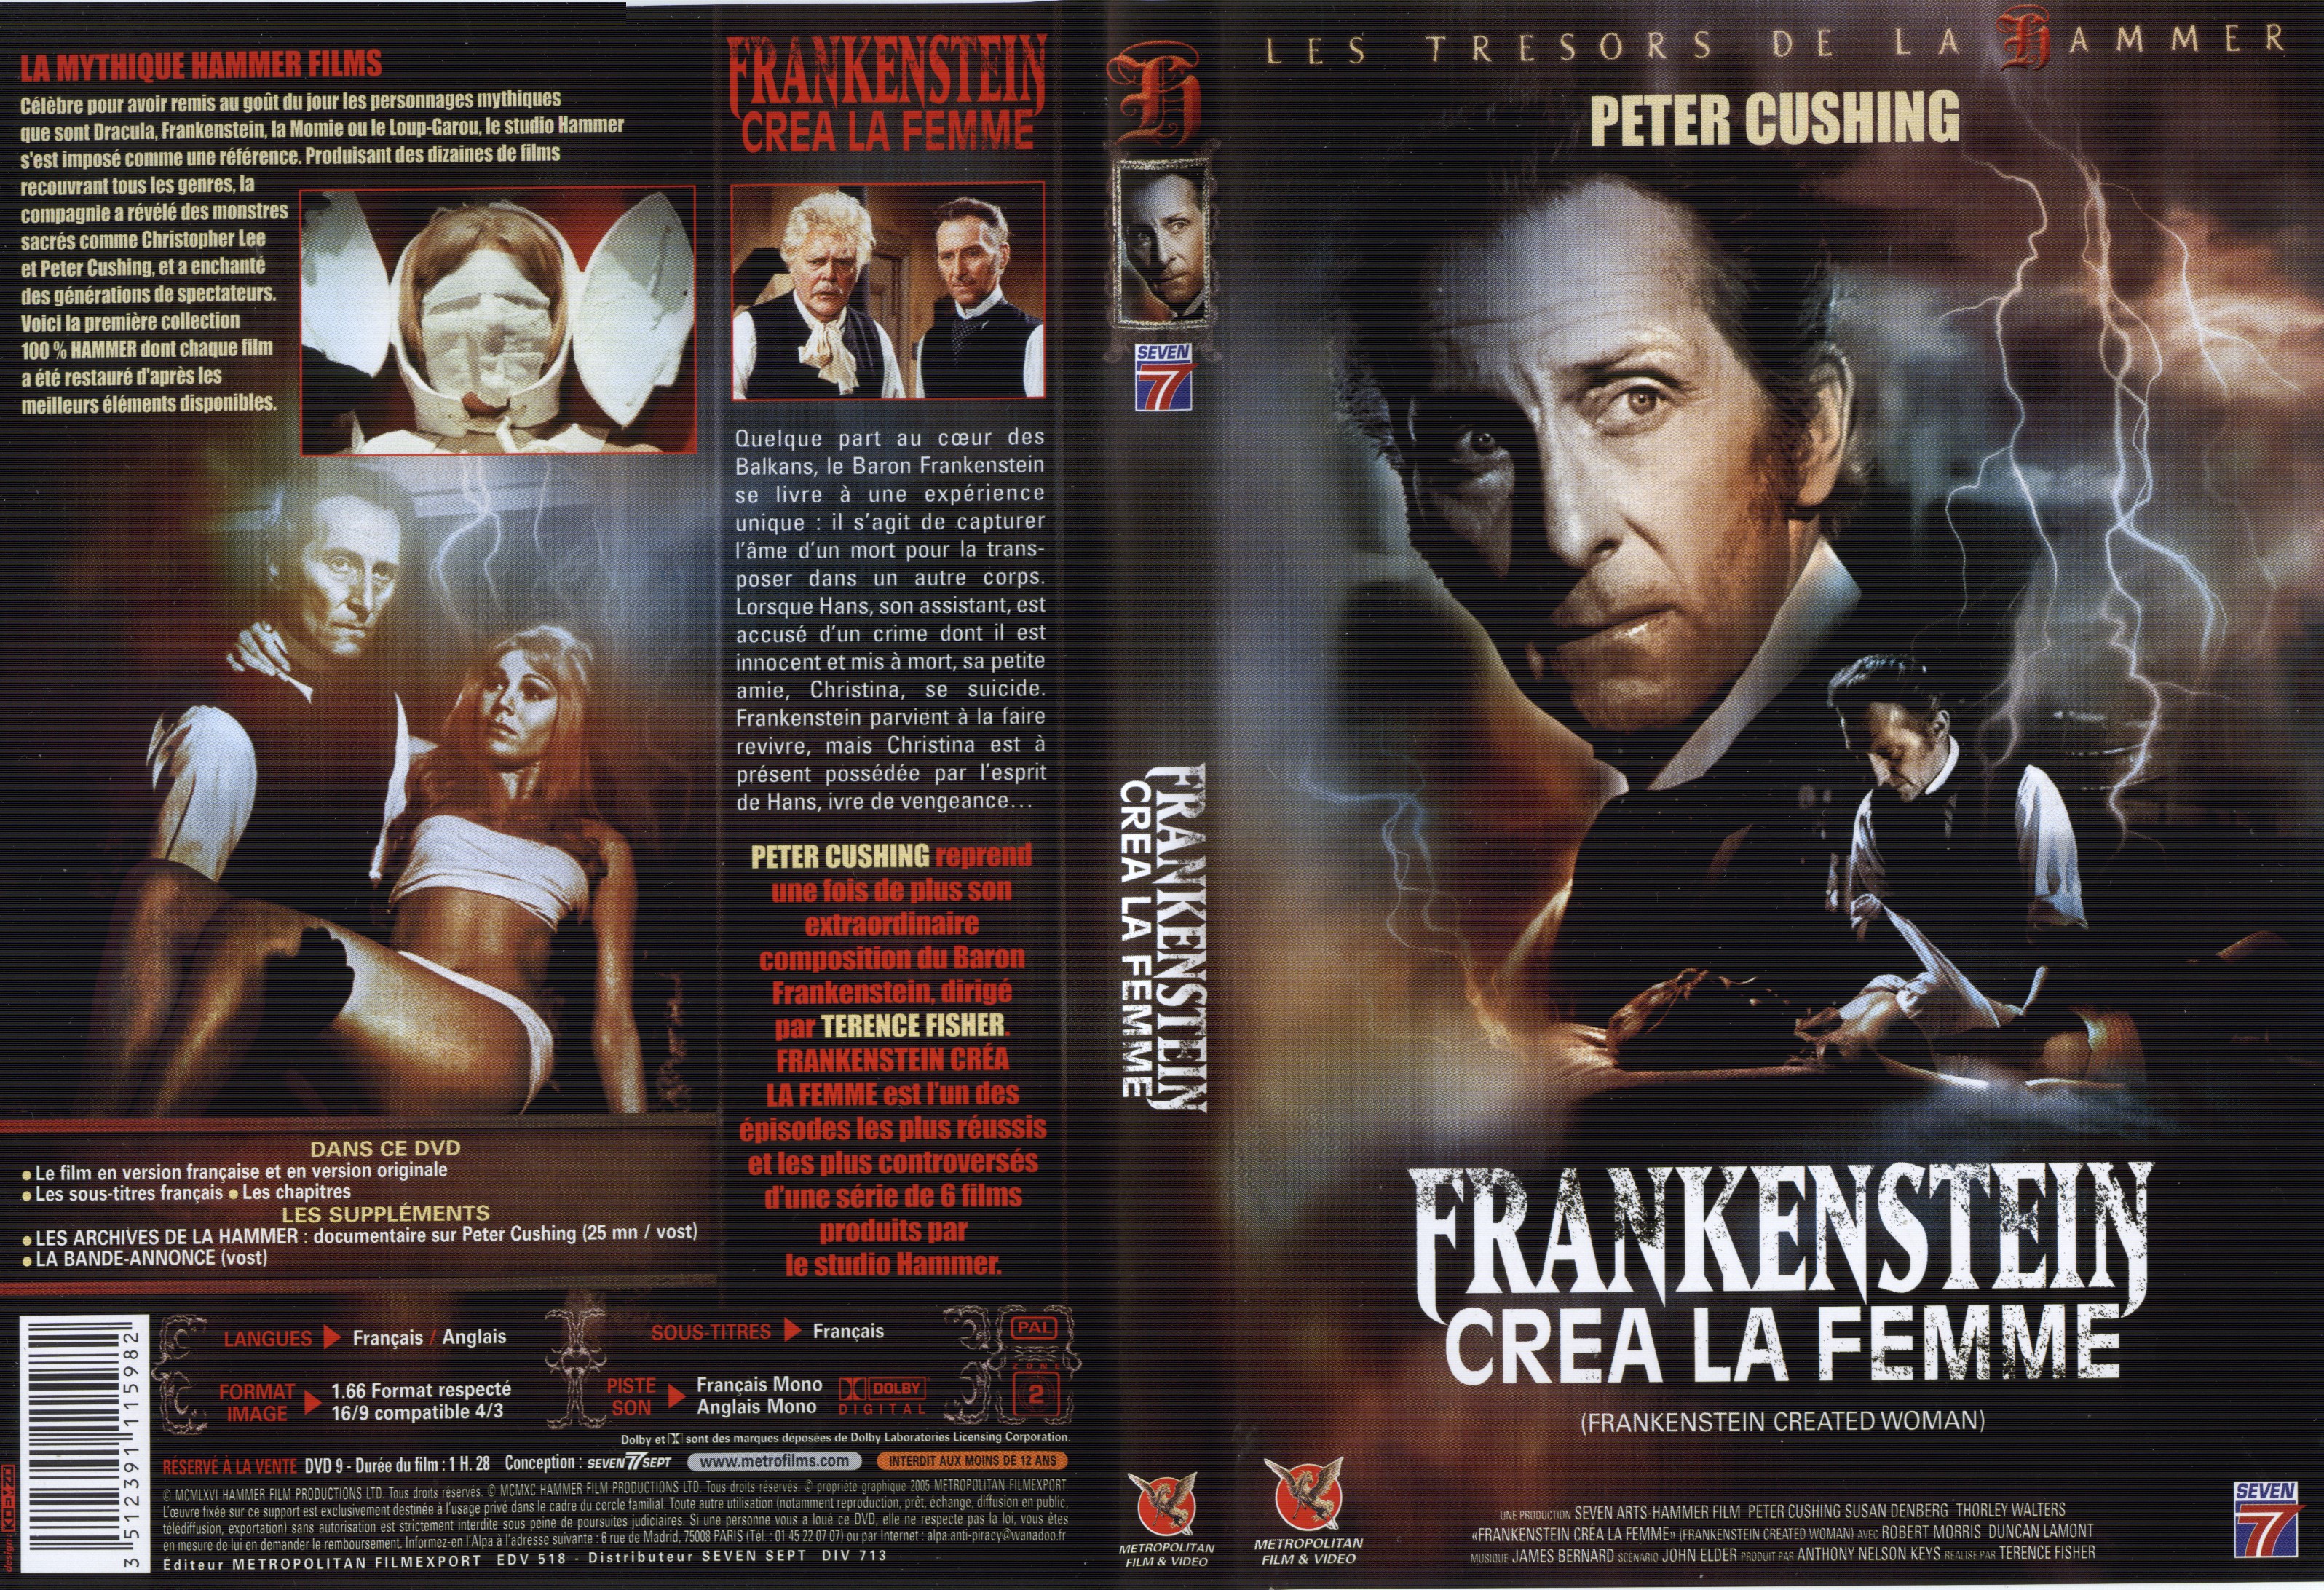 Jaquette DVD Frankenstein cra la femme